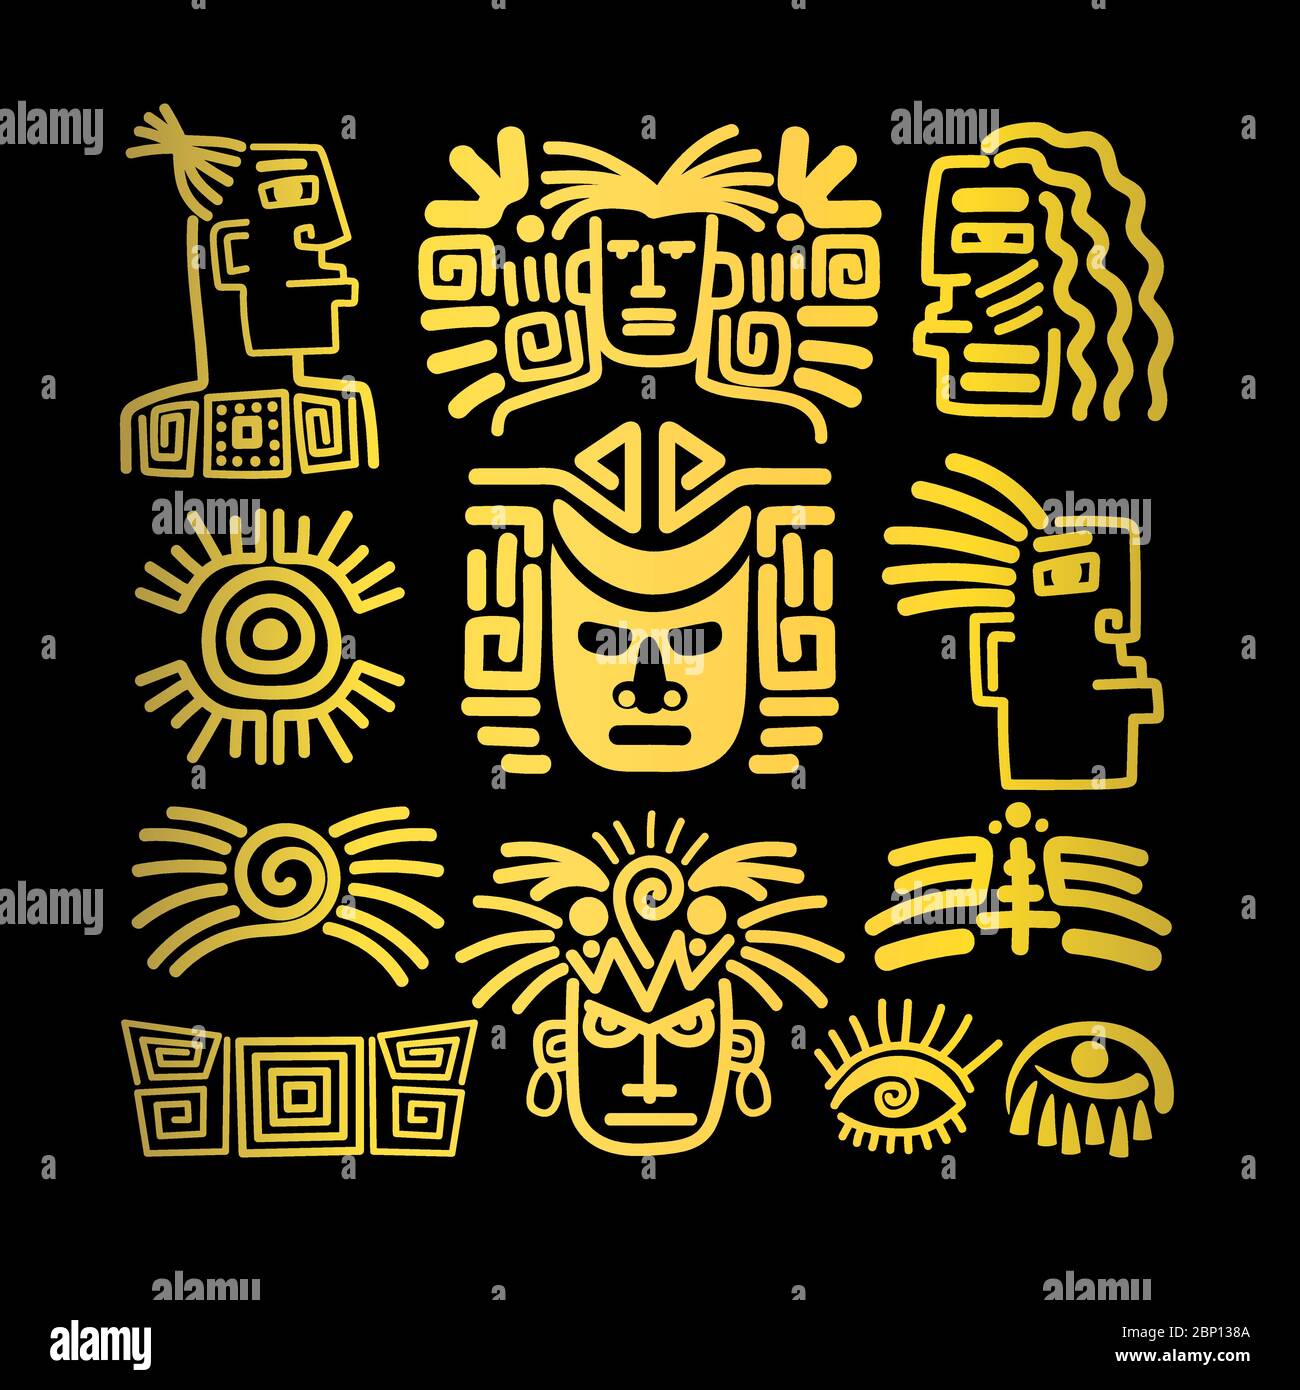 Tribal face drawings set, golden symbols, vector illustration Stock Vector